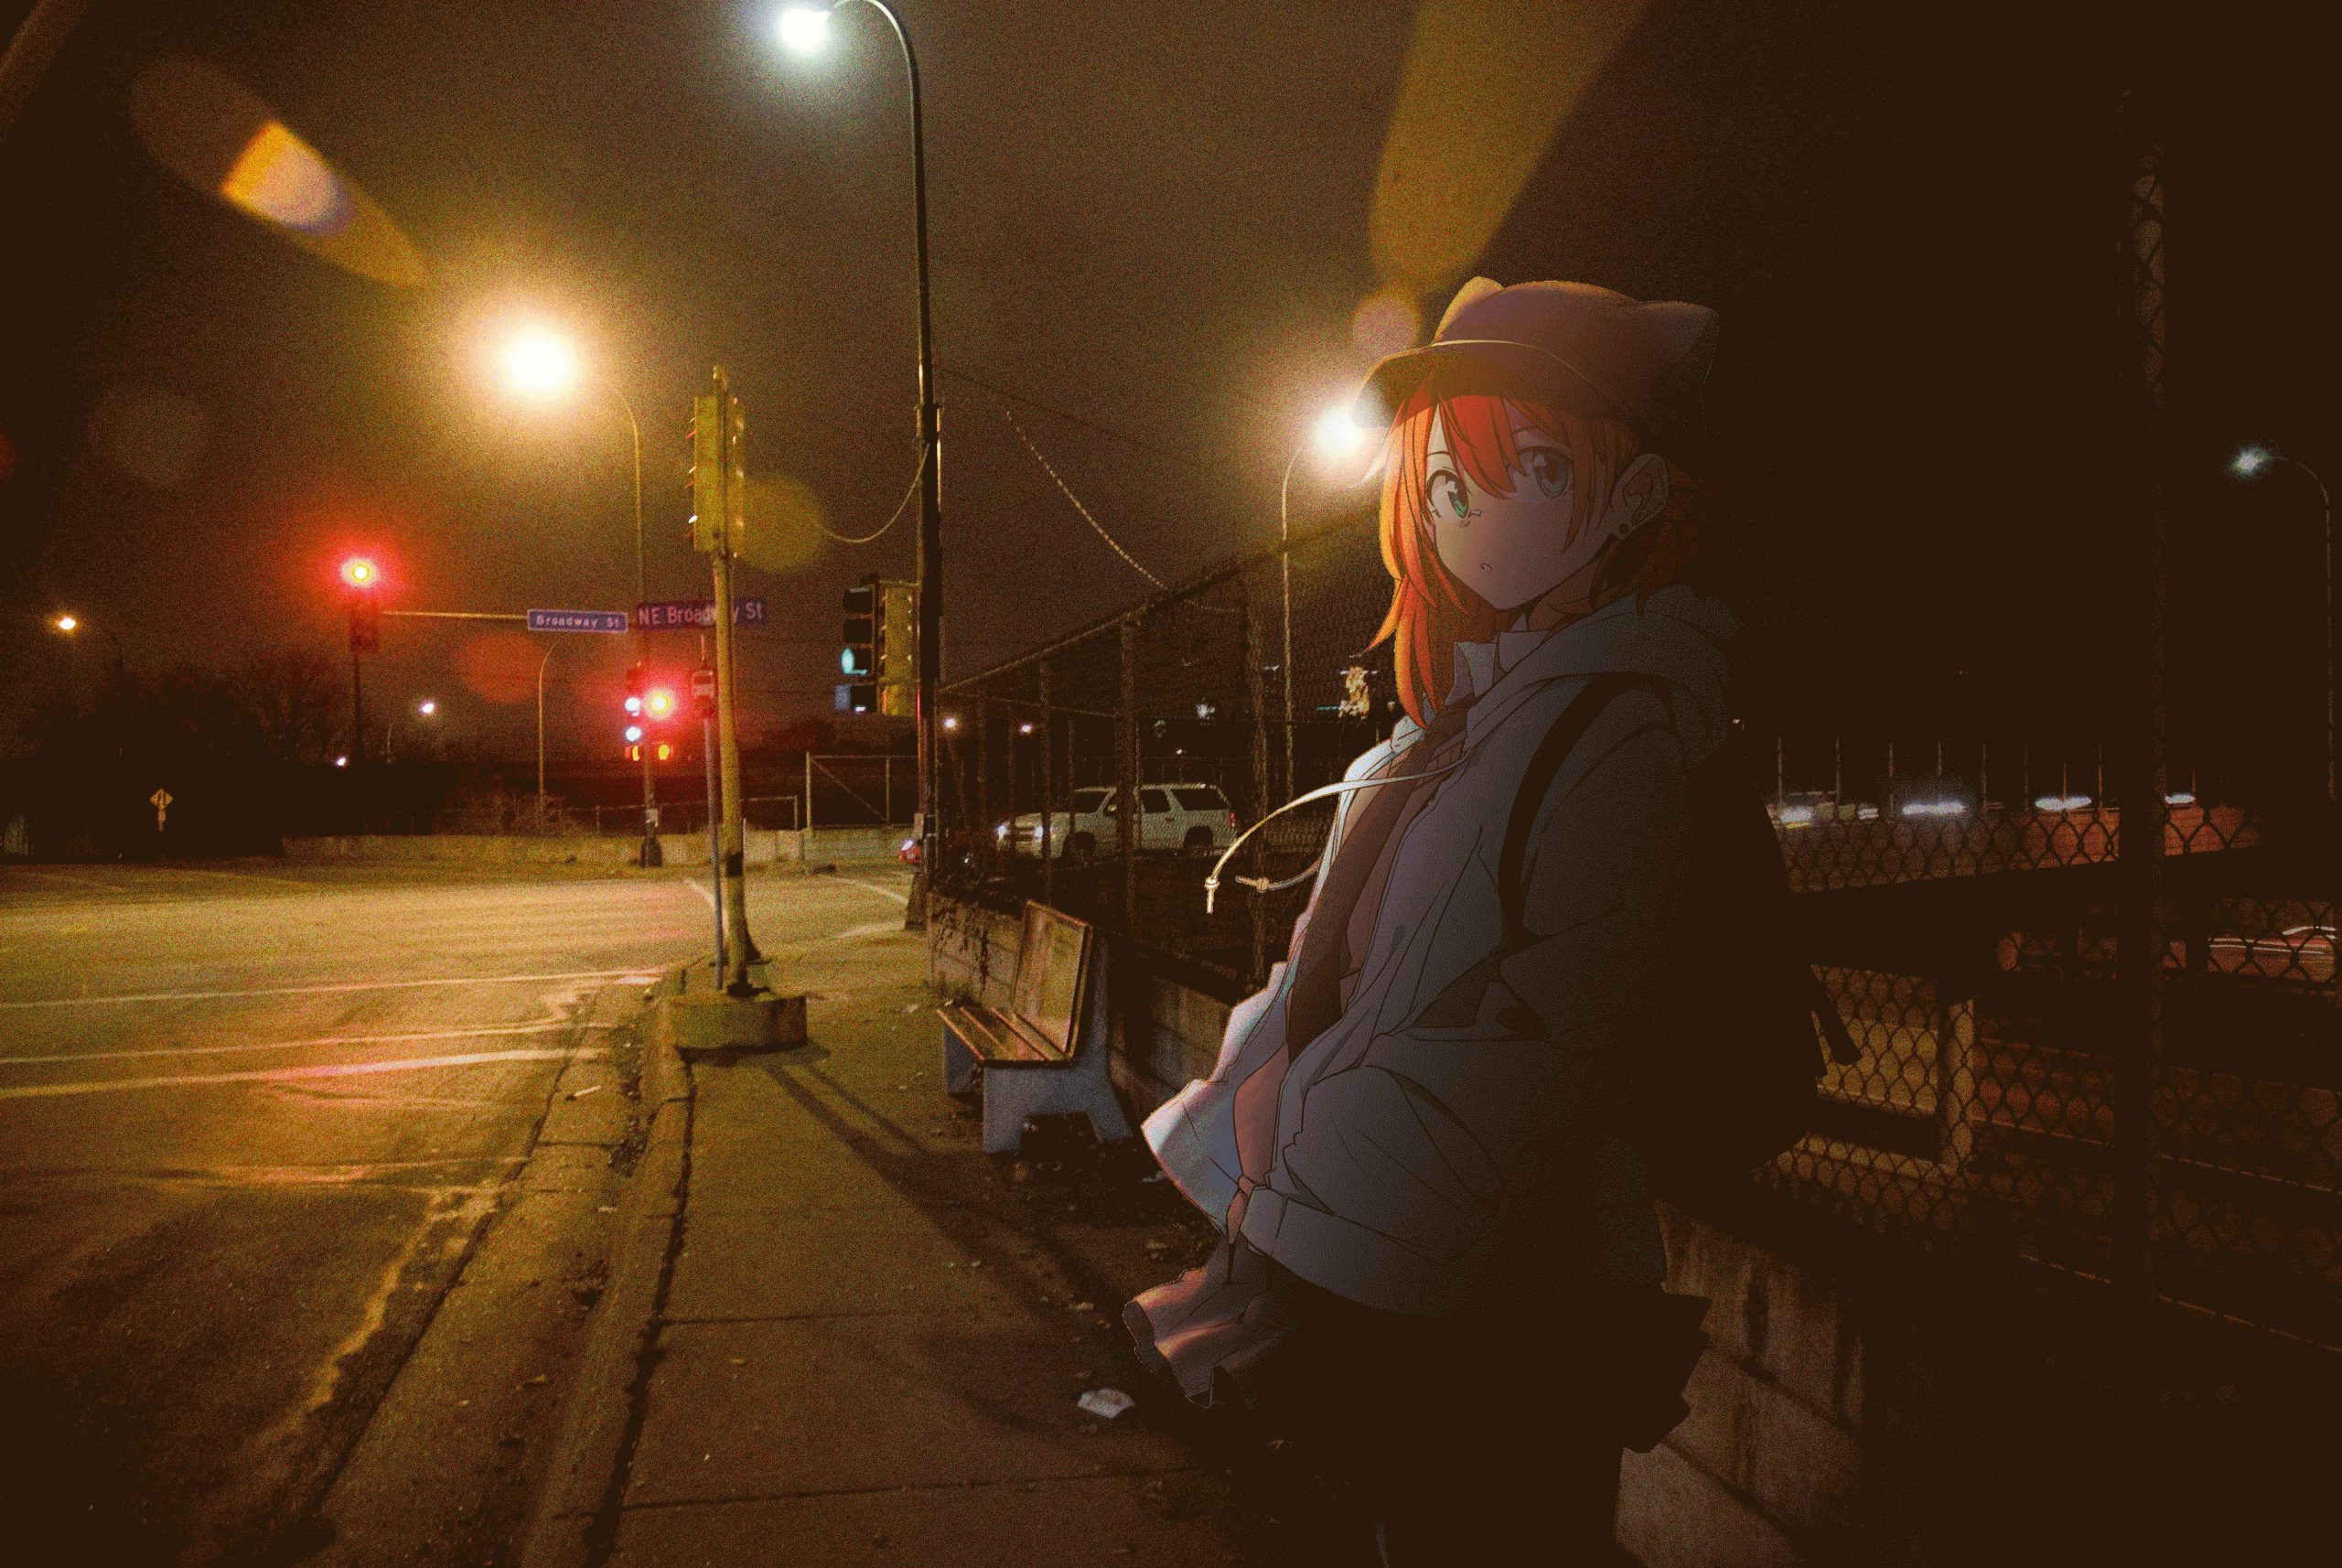 Wallpaper Bus Stations, Anime Girls, Urban, Night, Street